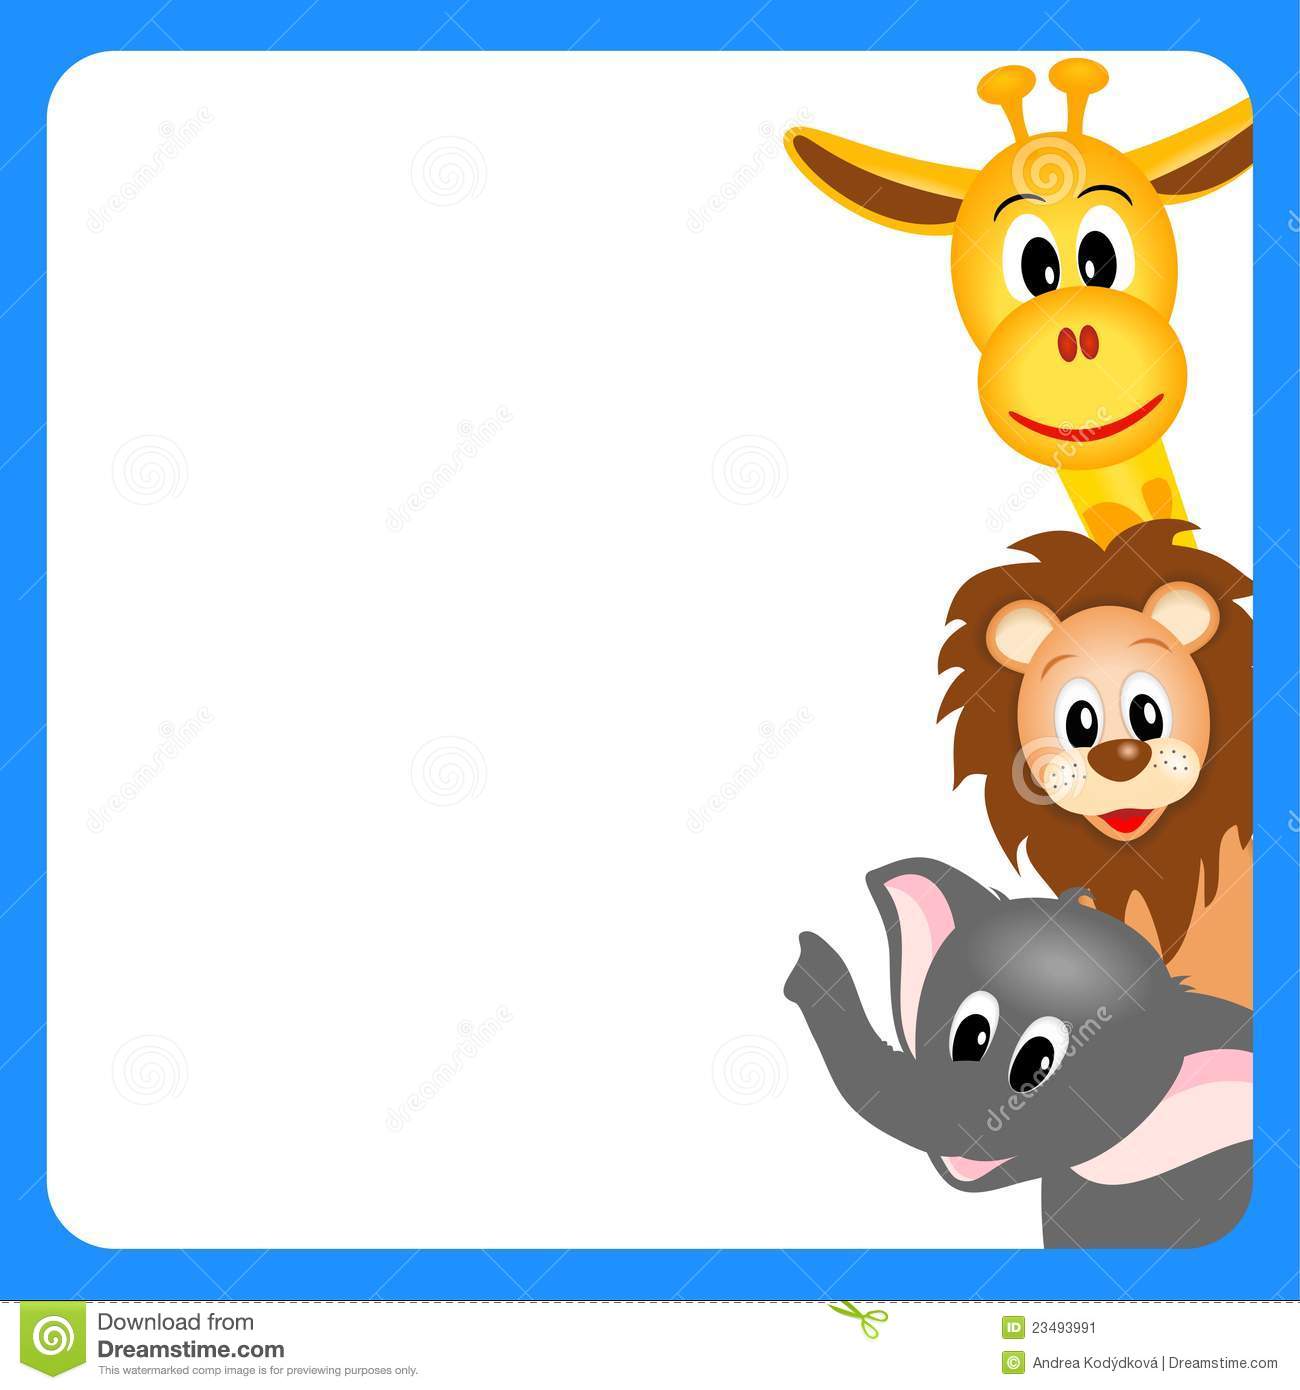 Little Giraffe Elephant And Lion Stock Image   Image  23493991